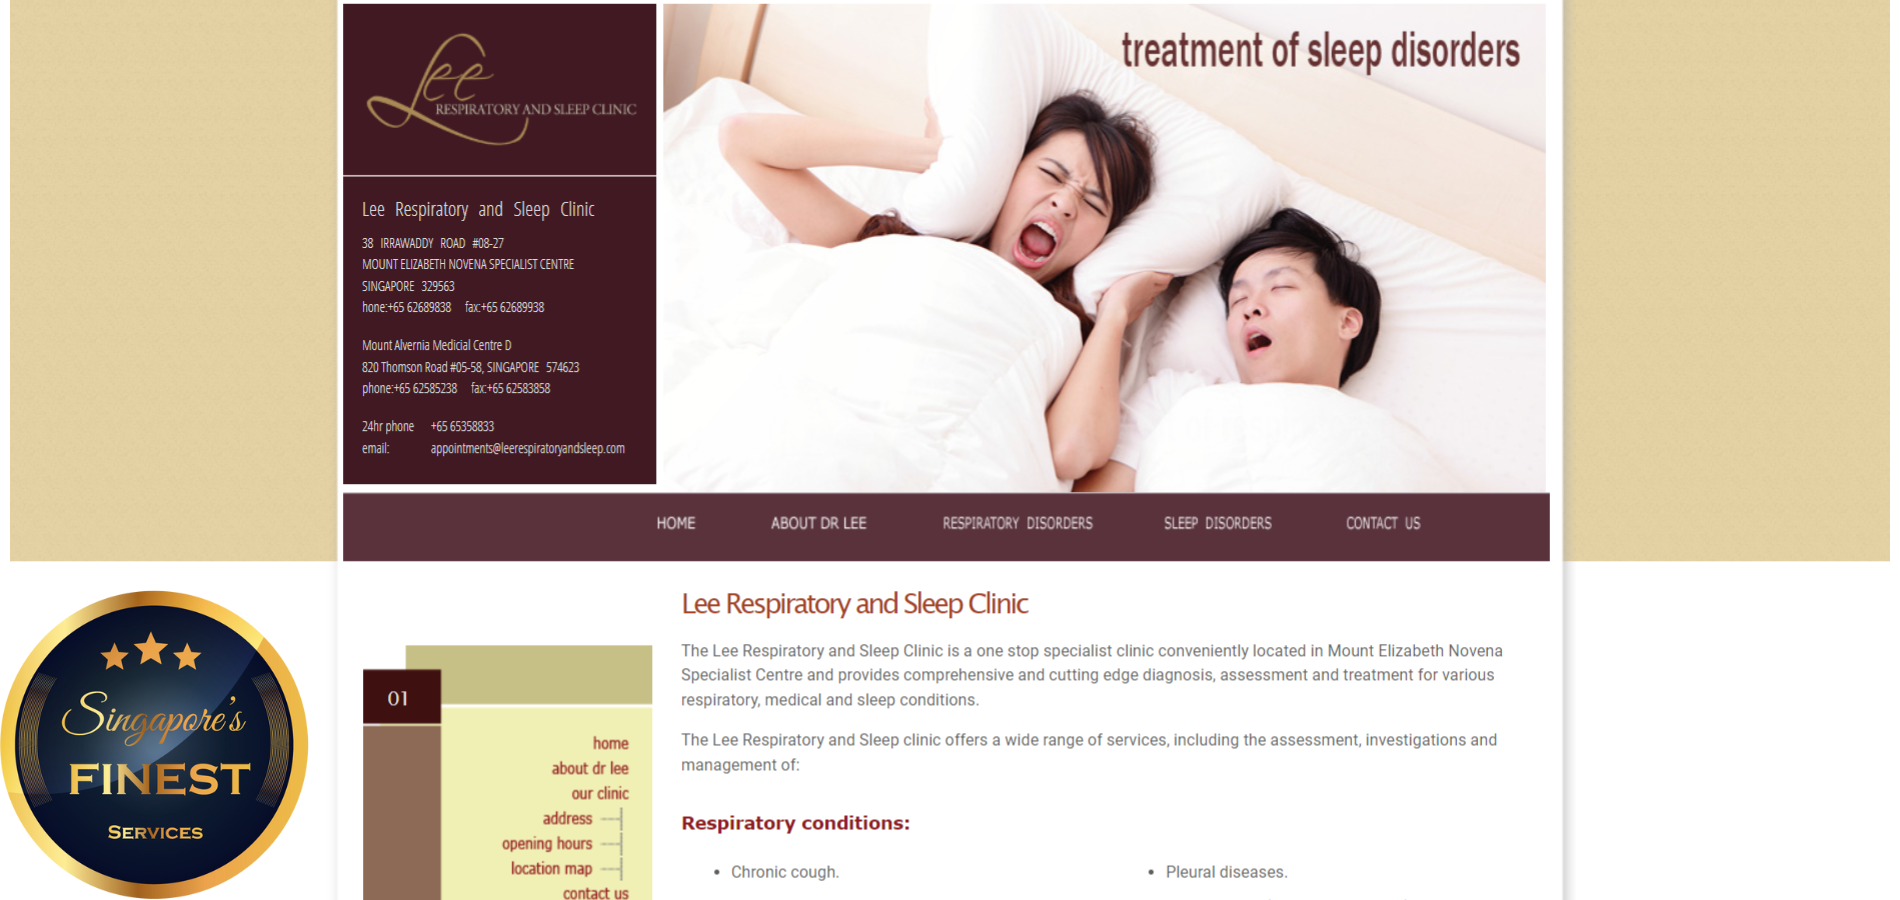 The Finest Sleep Clinics in Singapore